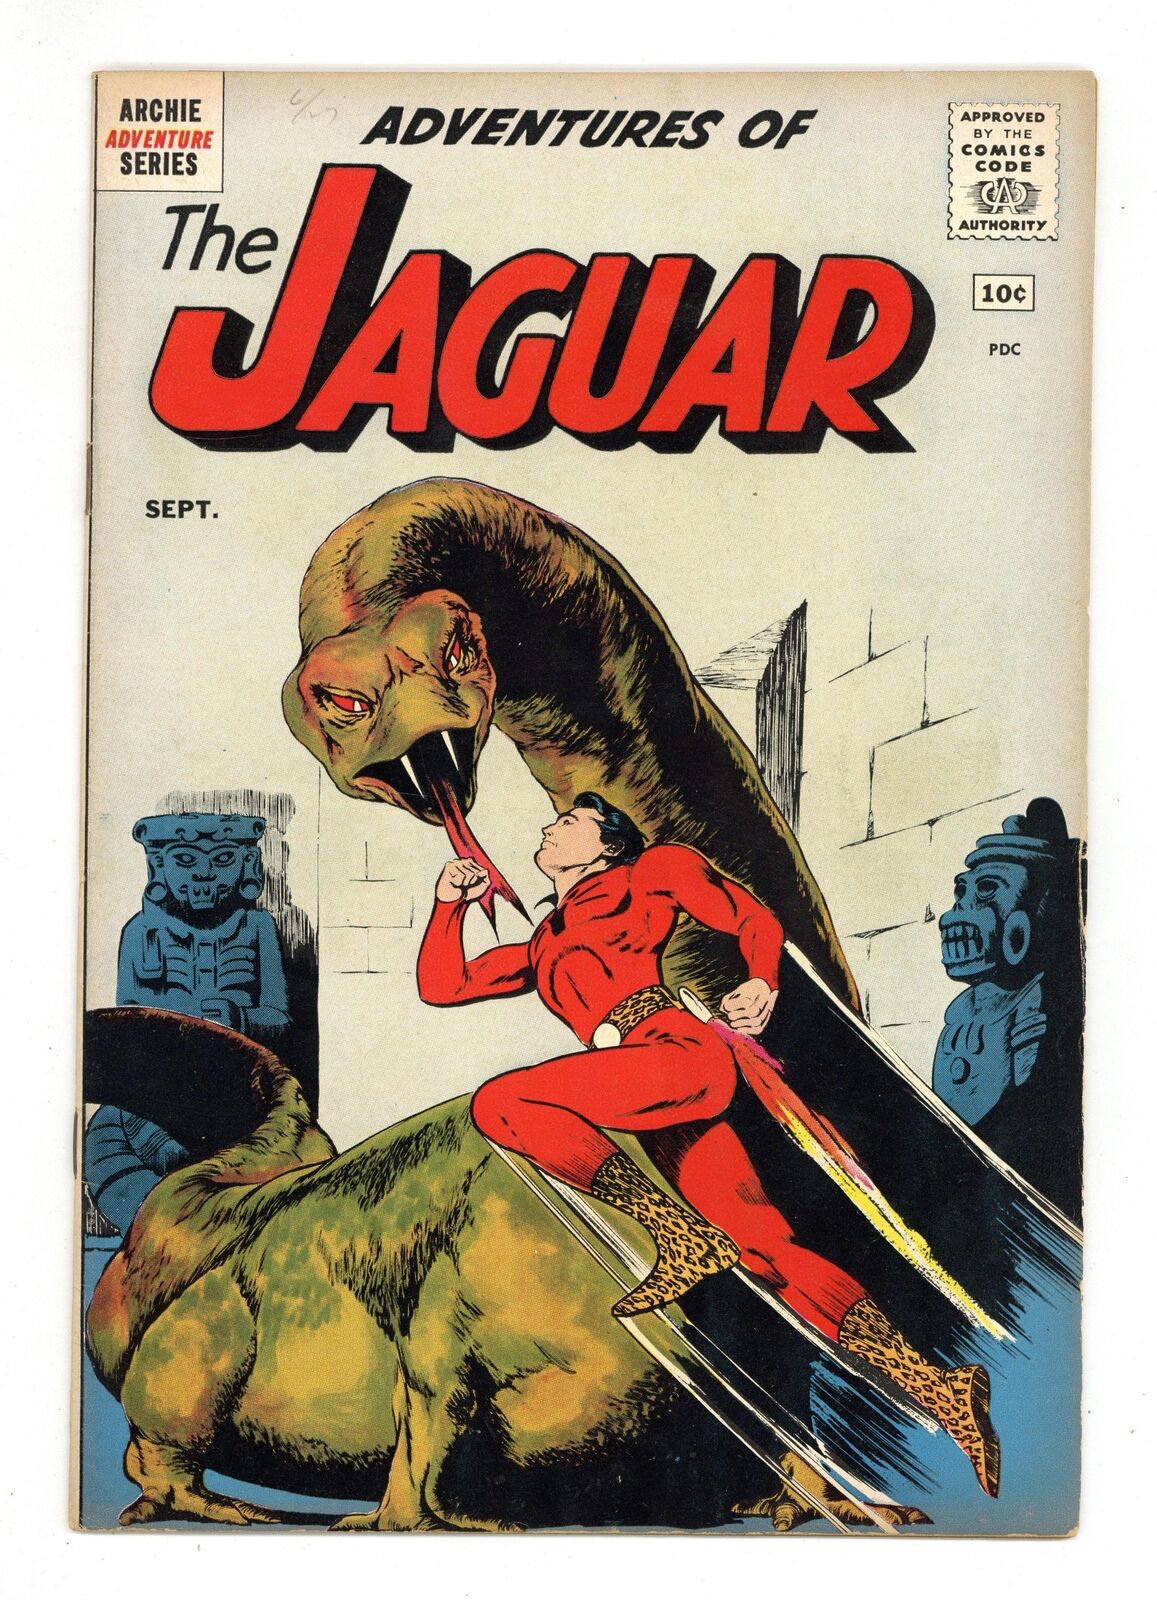 Adventures of the Jaguar #1 VG+ 4.5 1961